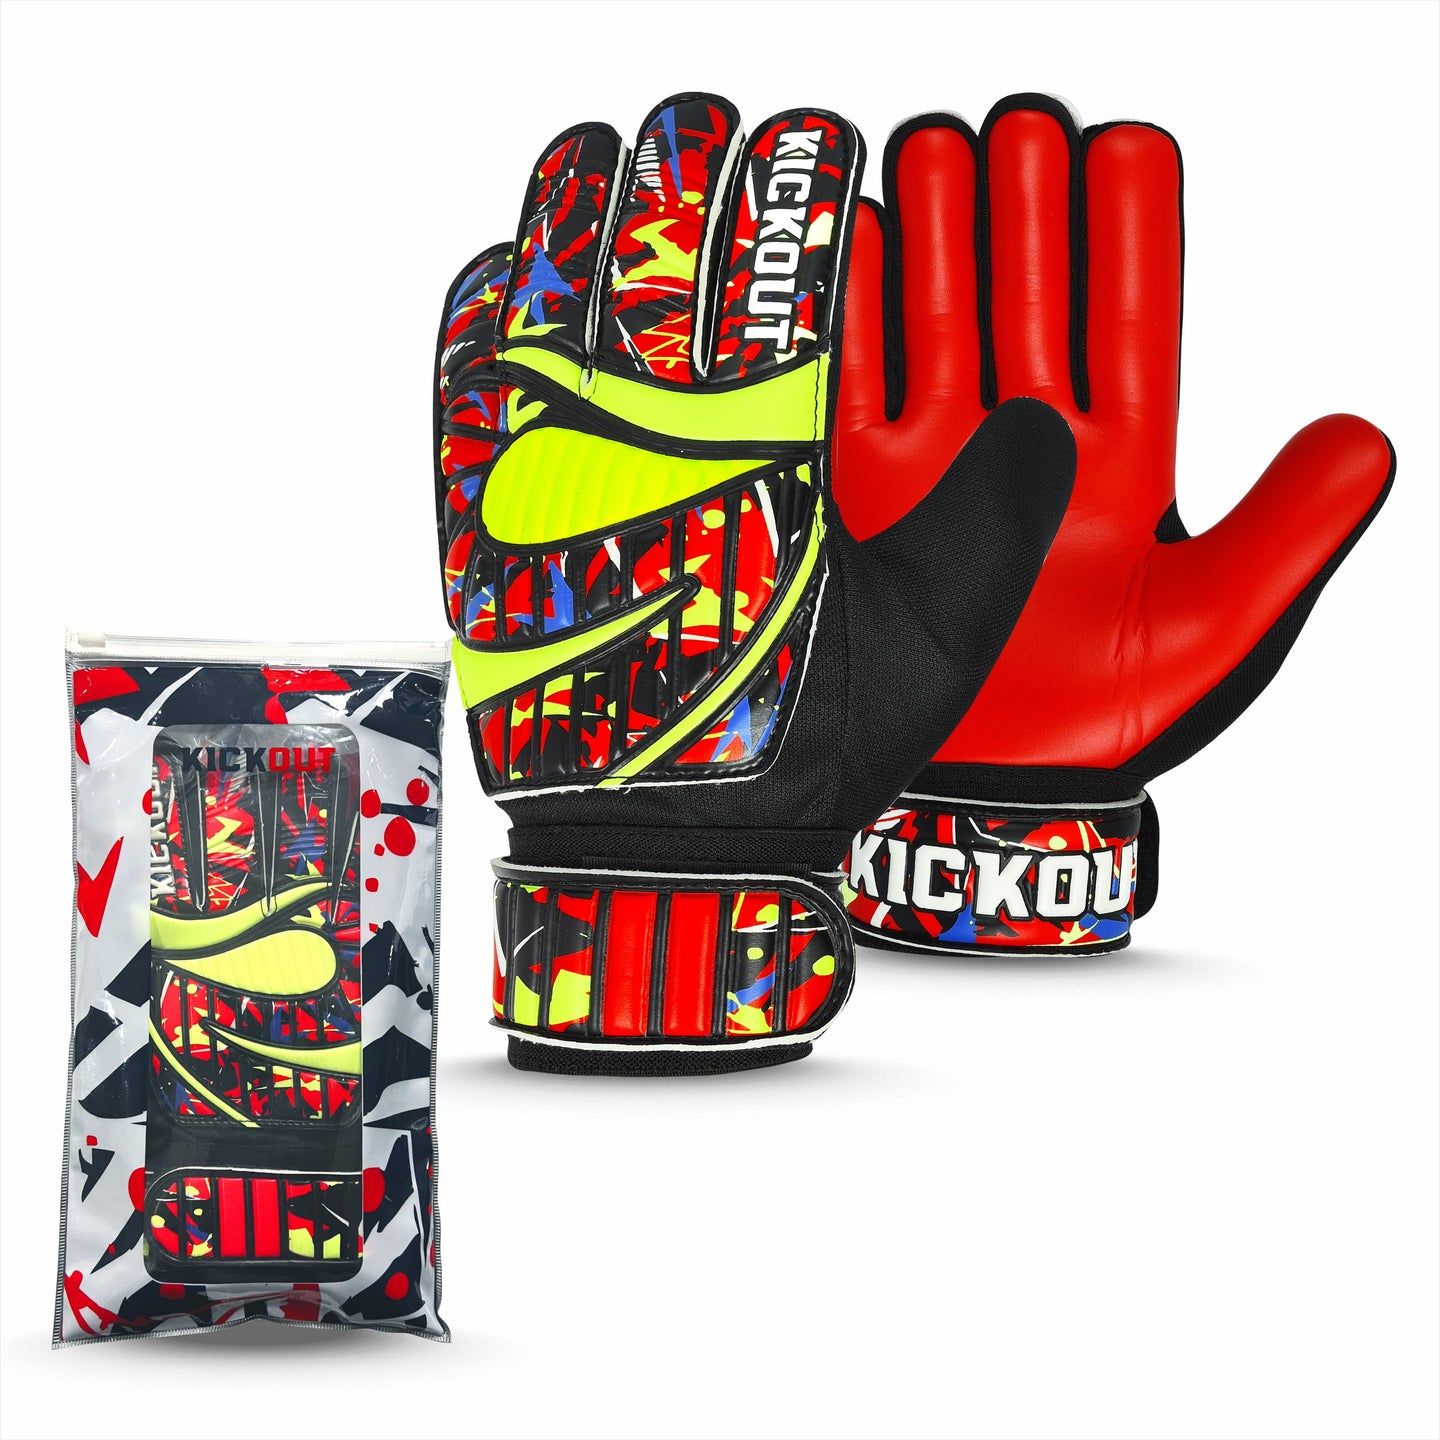 Kickout Jol Goalkeeping Glove Kickout-Gk Protection Gear